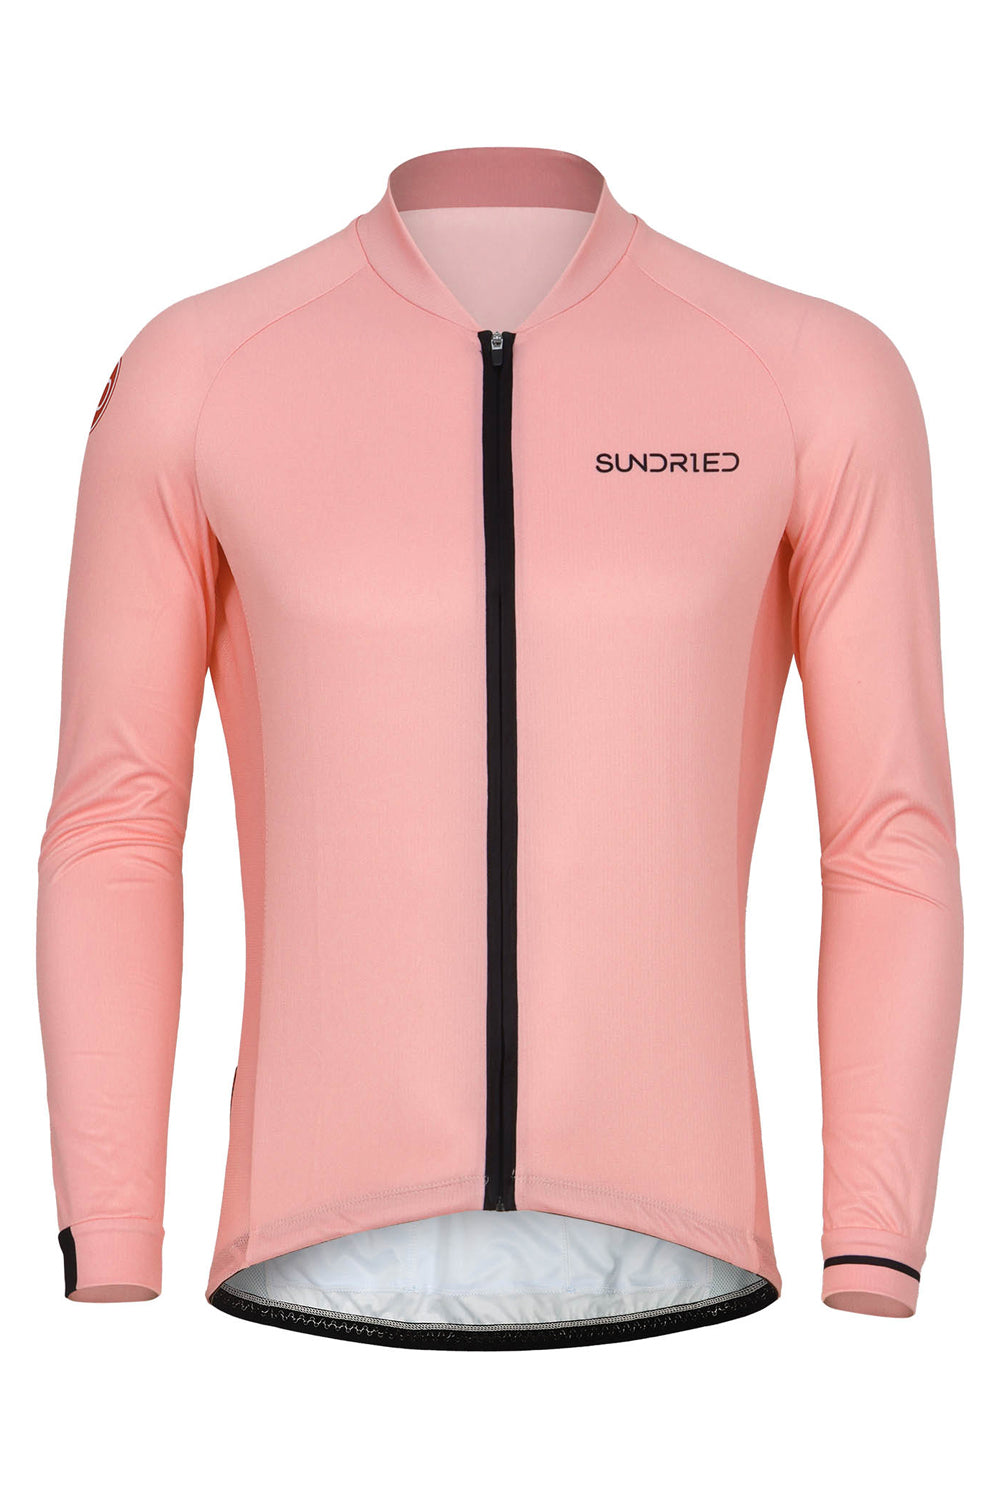 Sundried Rosa Men's Long Sleeve Cycle Jersey Long Sleeve Jersey M Pink SD0451 M Pink Activewear